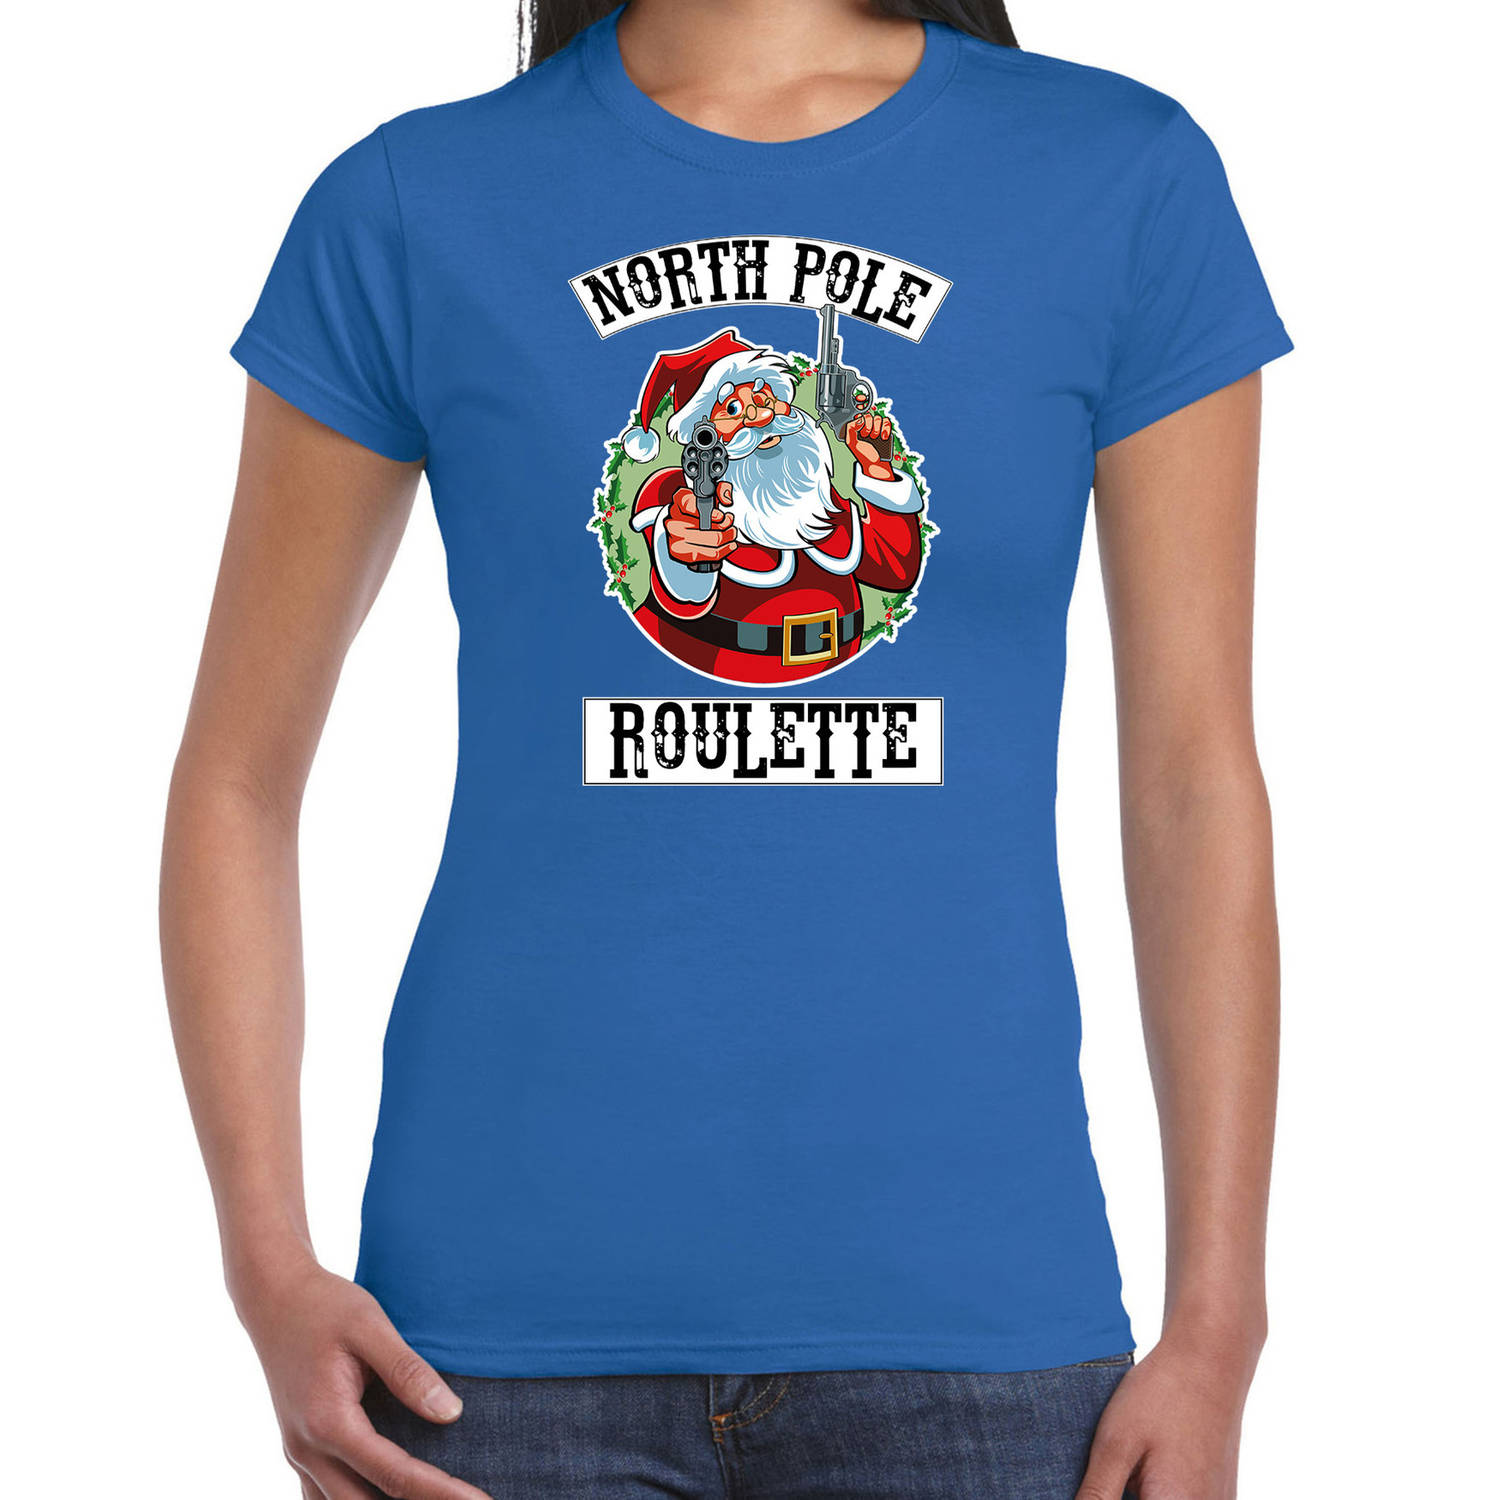 Blauw Kerstshirt / Kerstkleding Northpole roulette voor dames M - kerst t-shirts